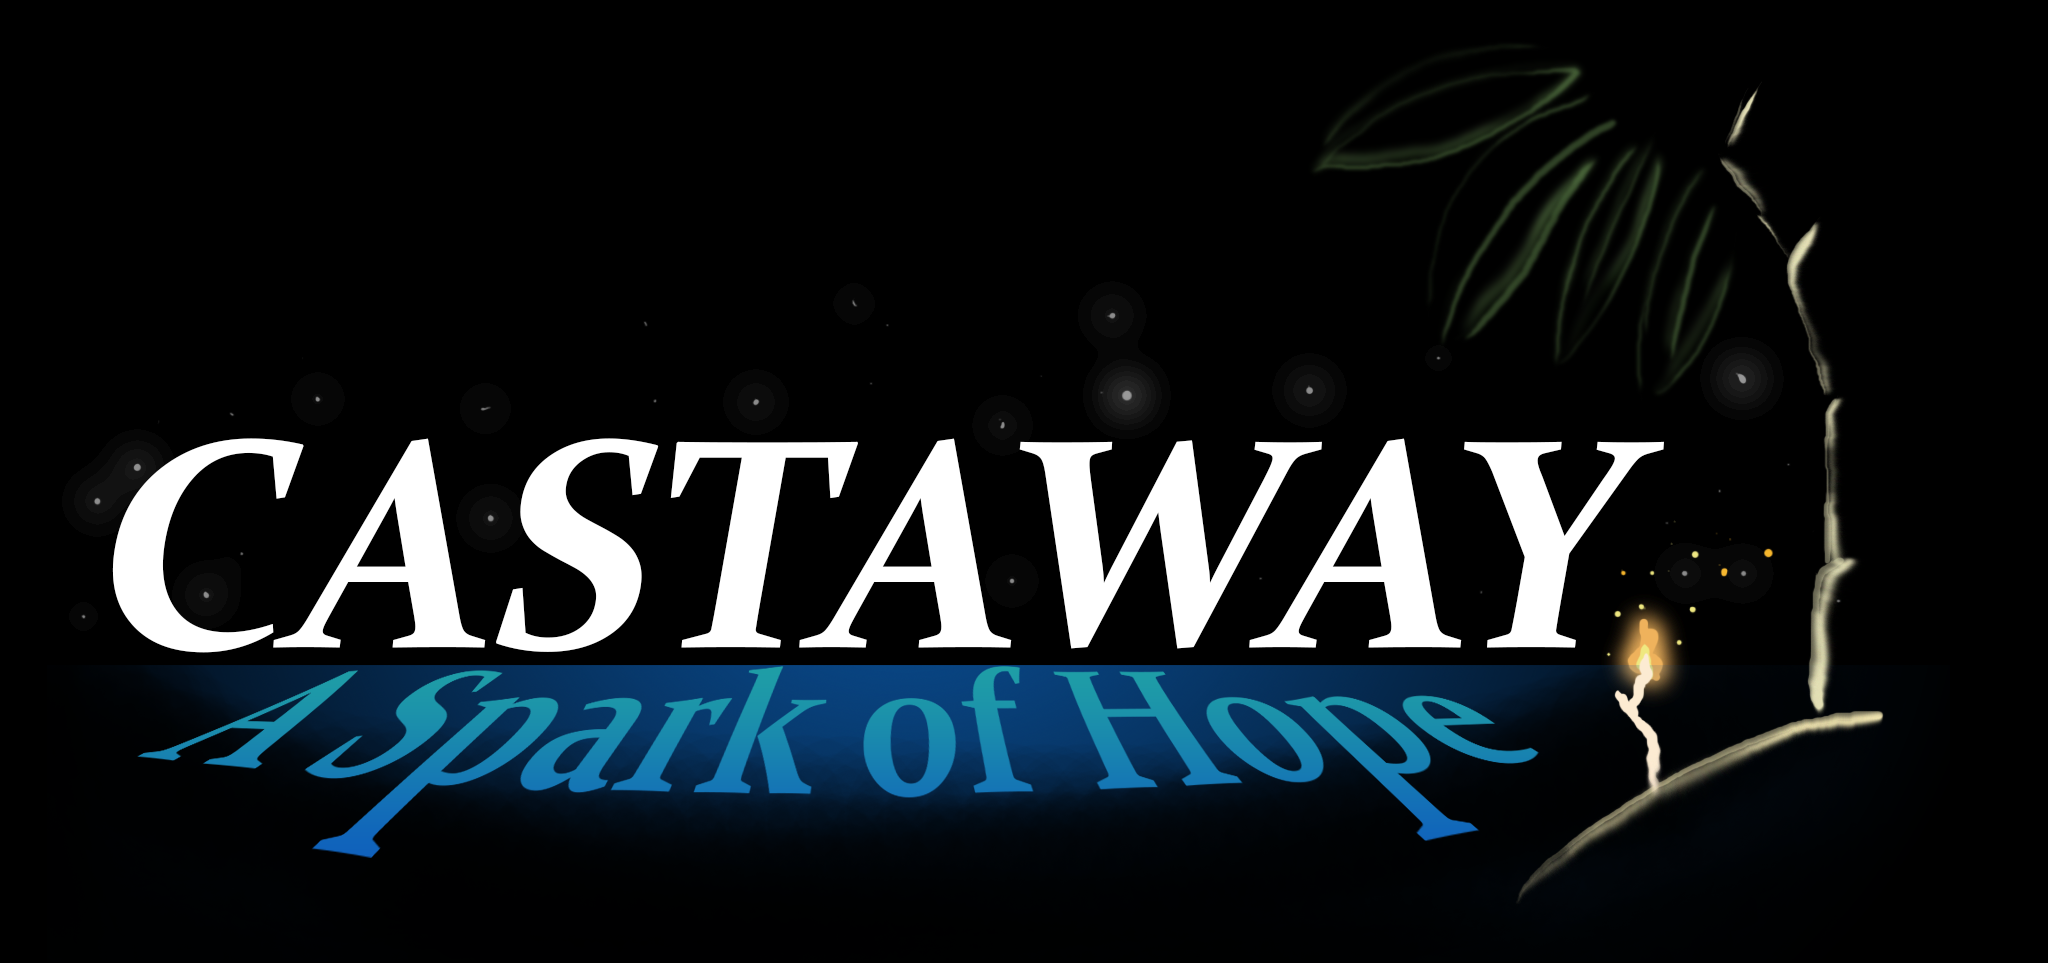 Castaway:A Spark of Hope